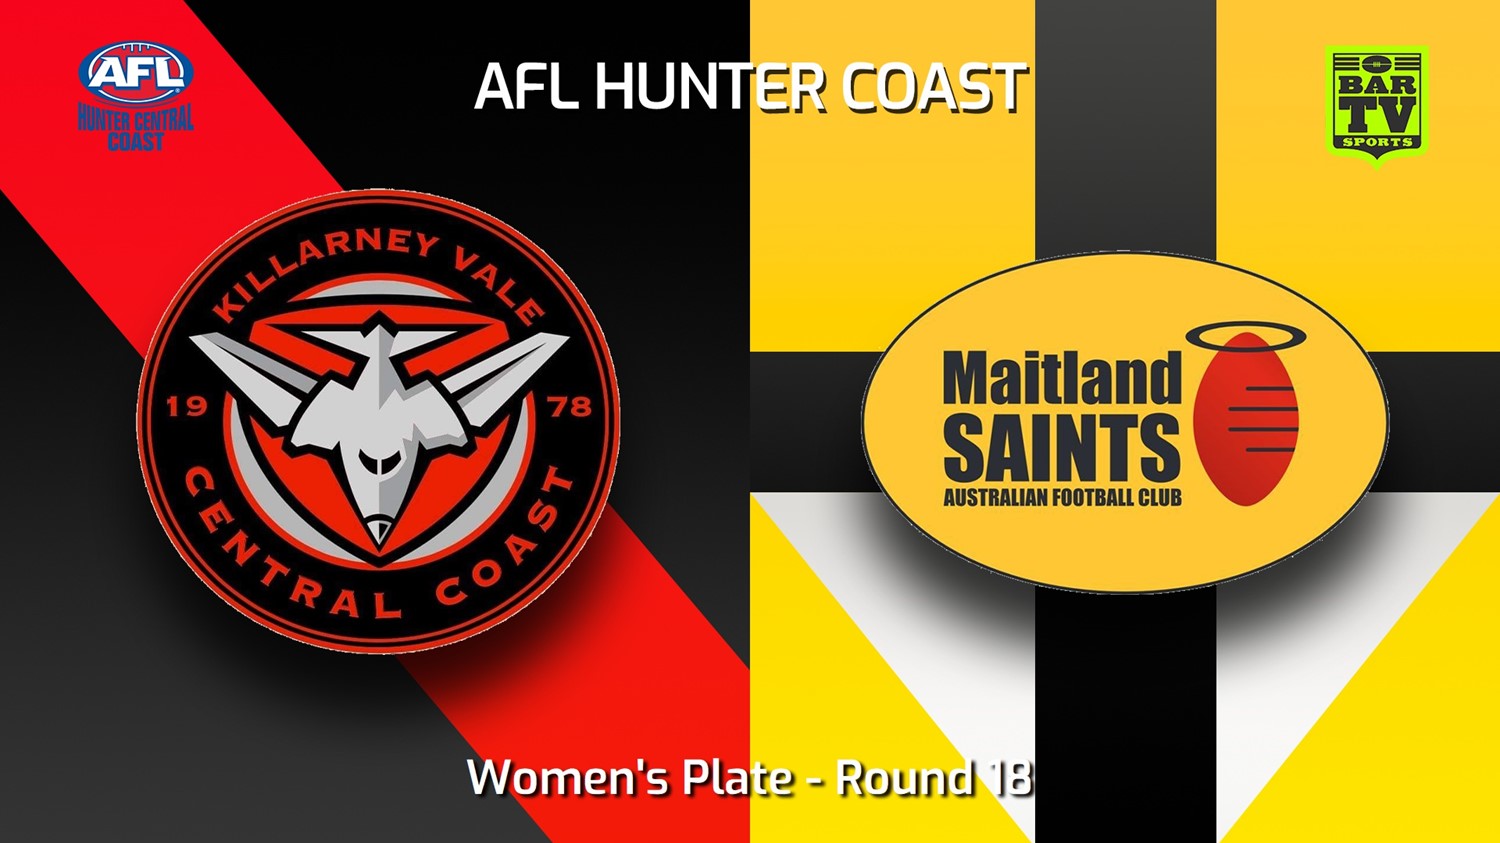 230819-AFL Hunter Central Coast Round 18 - Women's Plate - Killarney Vale Bombers v Maitland Saints Minigame Slate Image